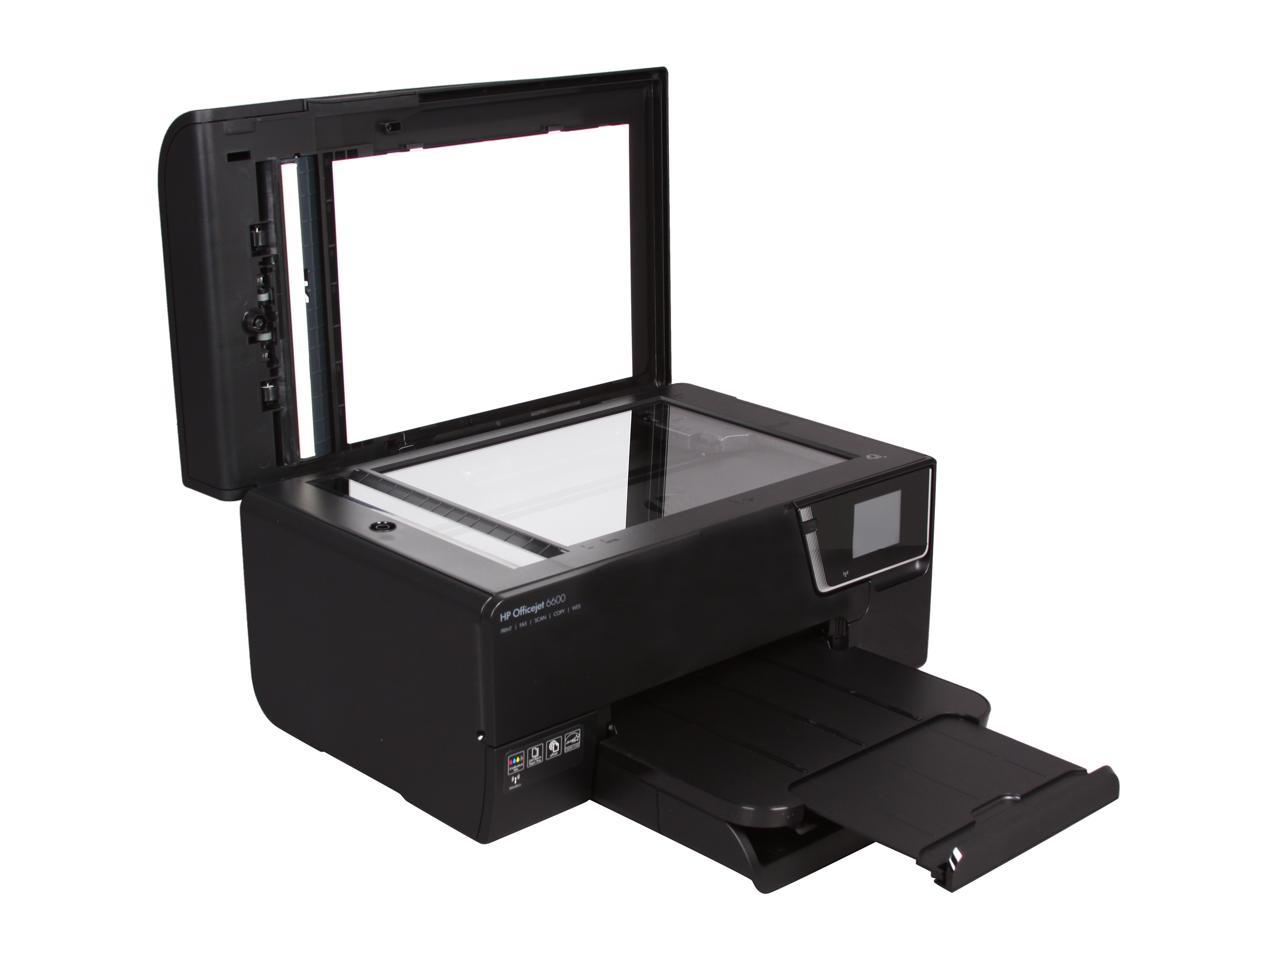 hp officejet 6600 printer install